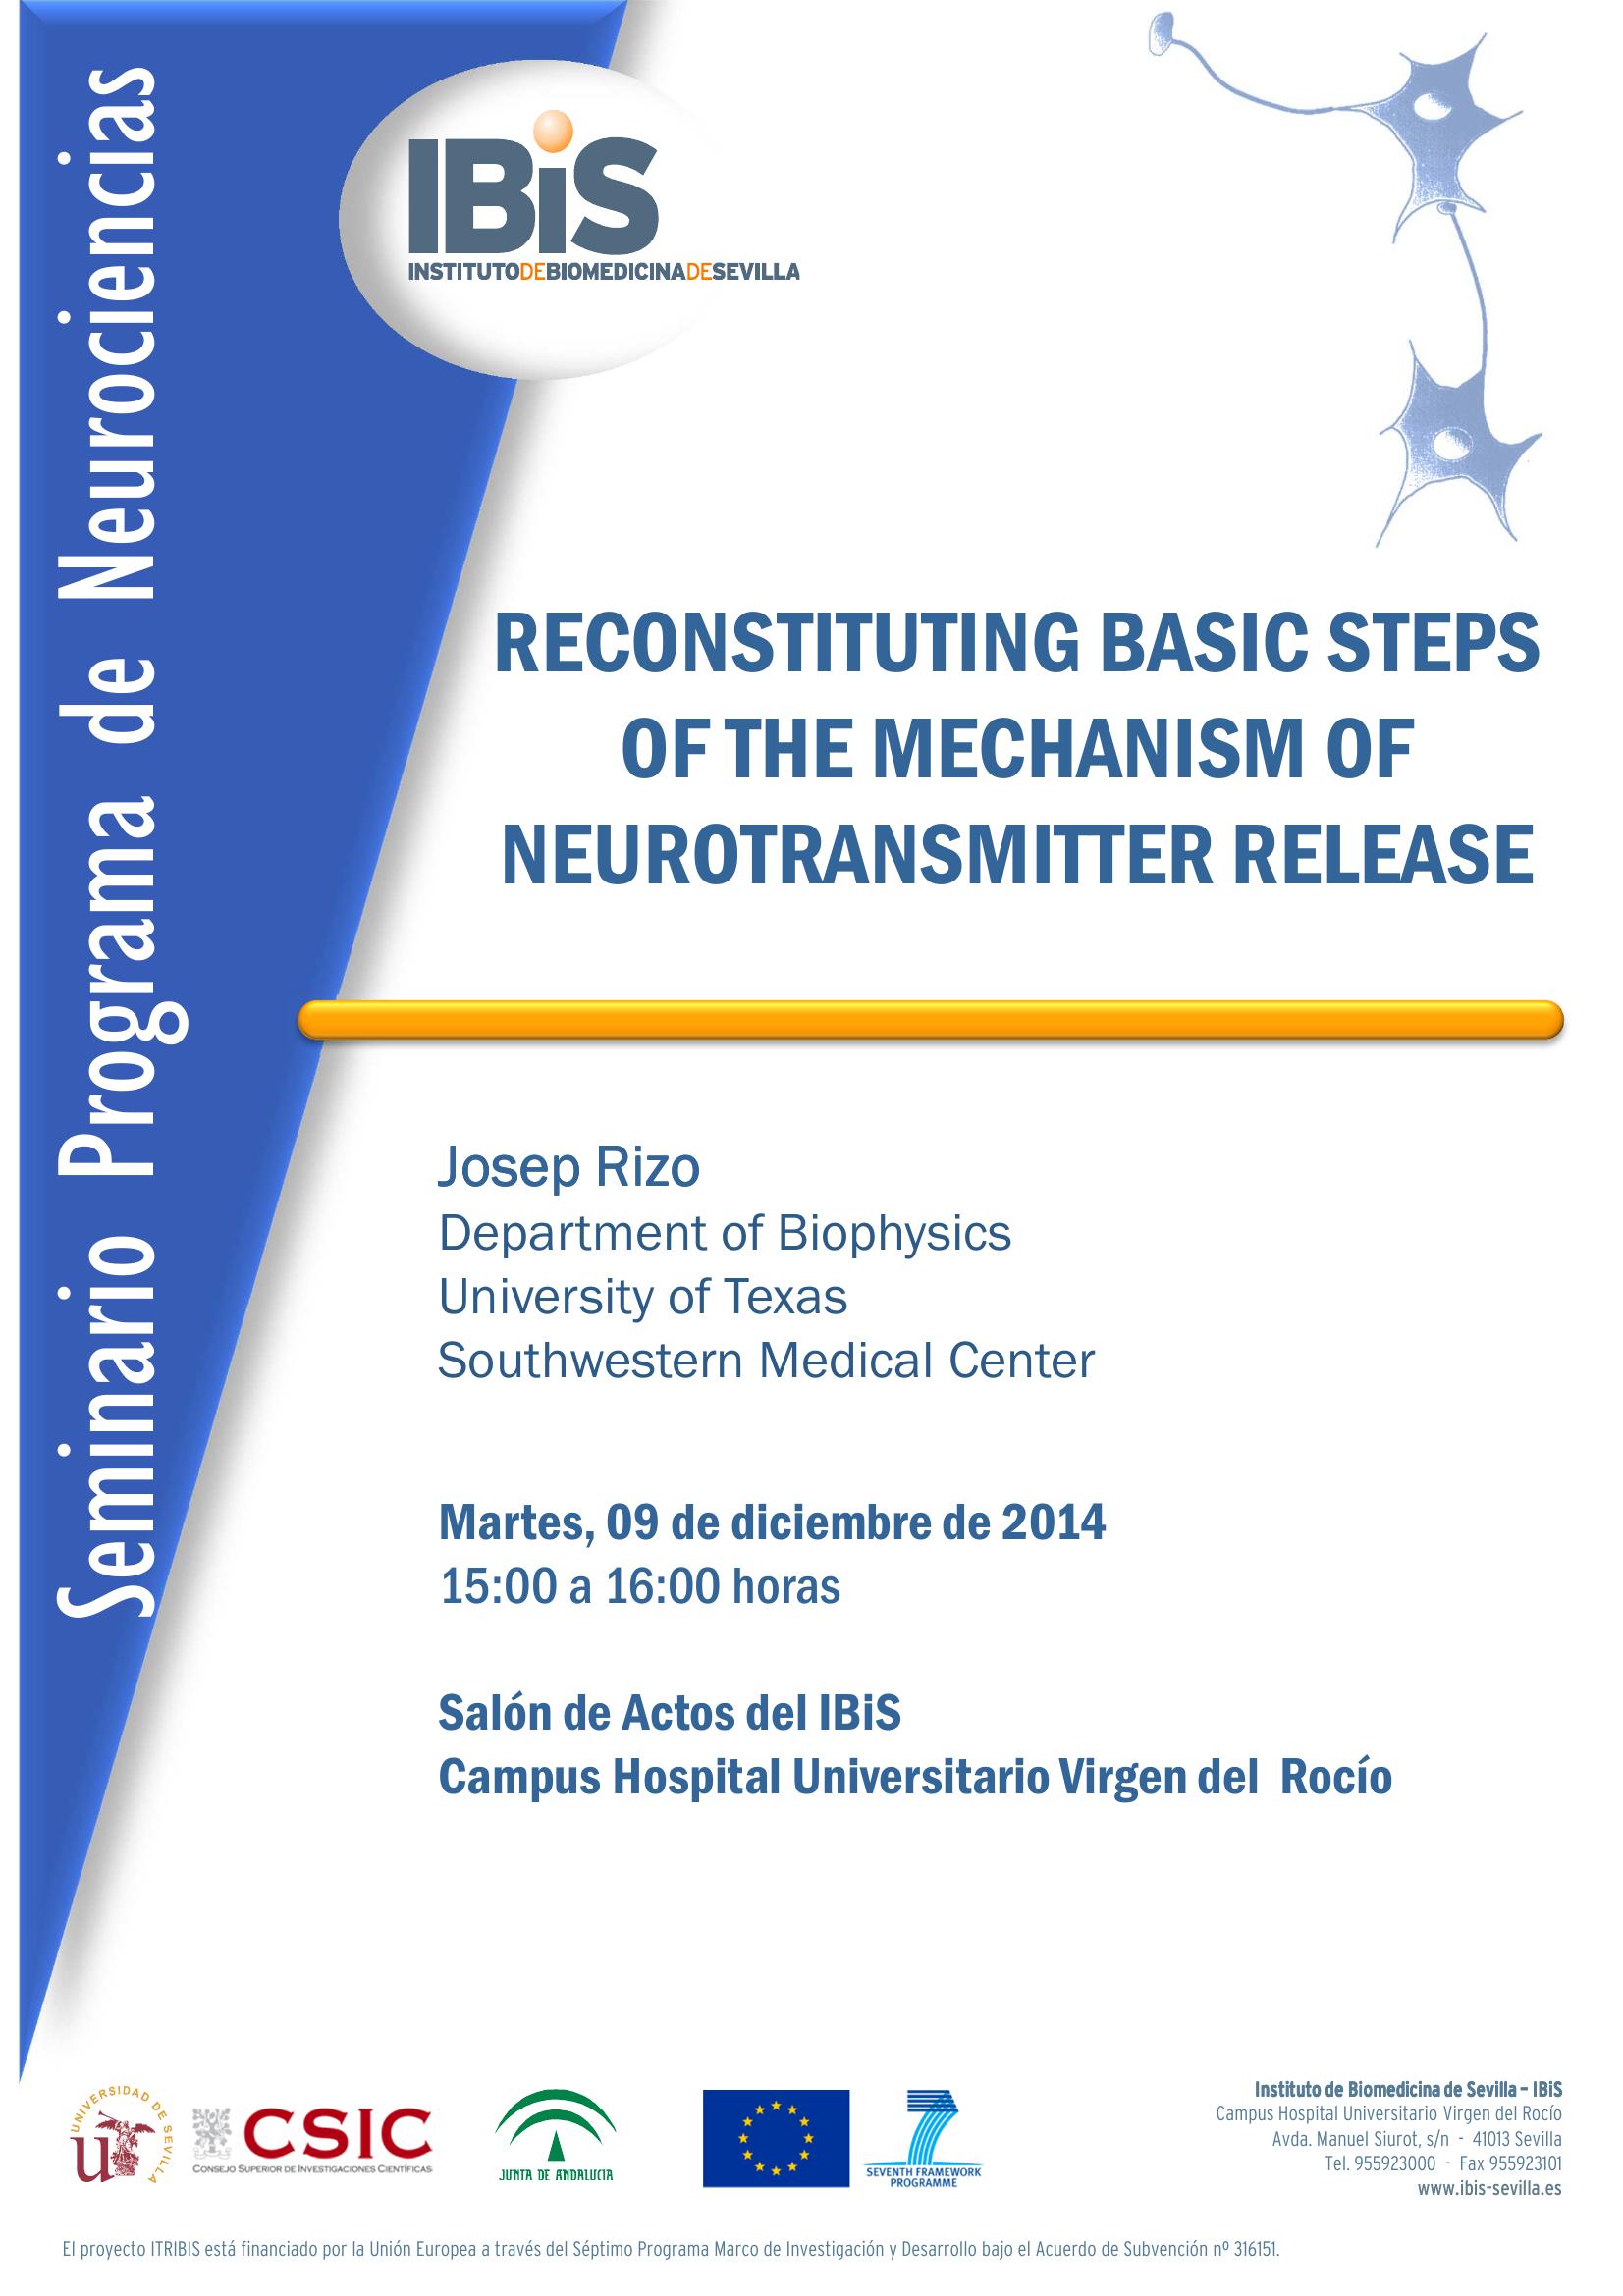 Poster: RECONSTITUTING BASIC STEPS OF THE MECHANISM OF NEUROTRANSMITTER RELEASE